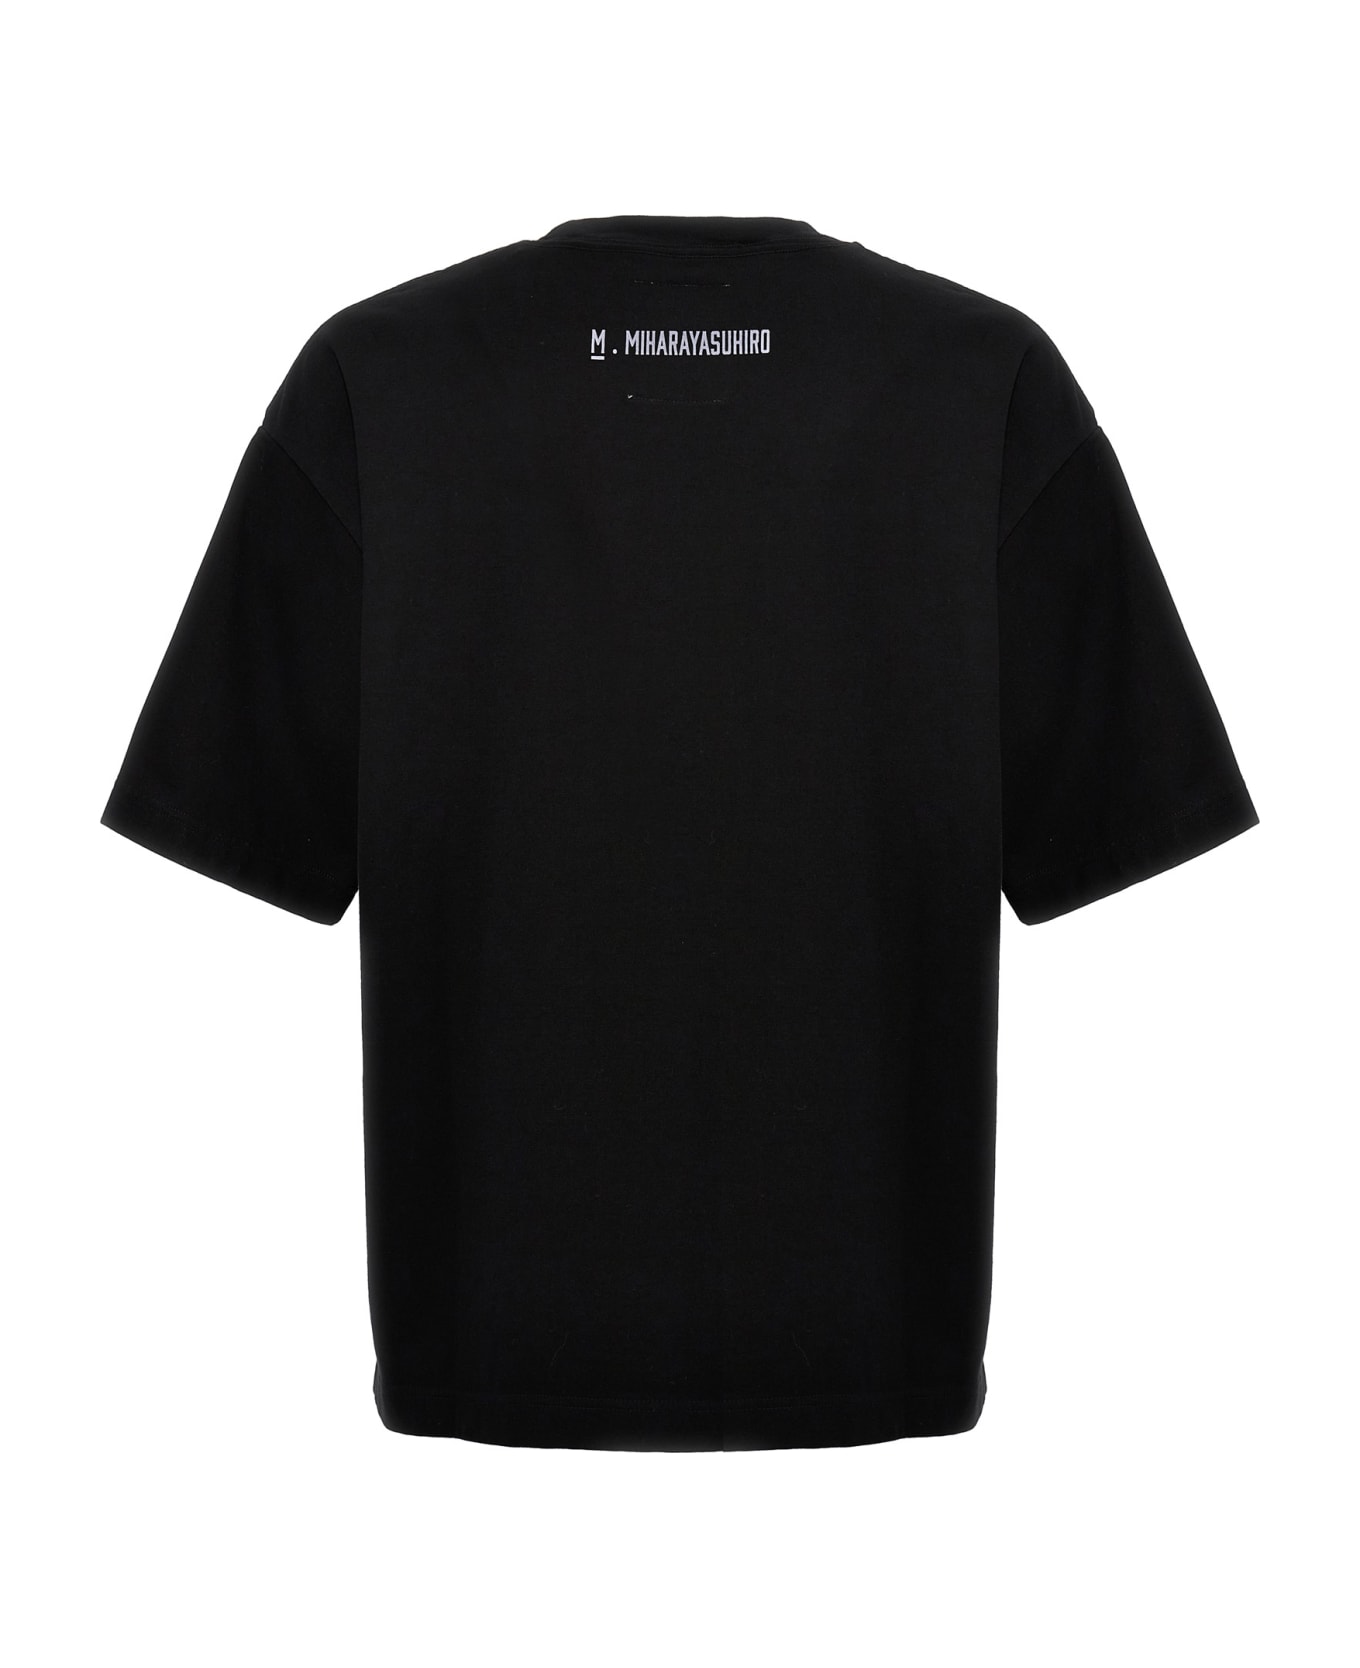 Mihara Yasuhiro 'lo-fi Vision' T-shirt - BLACK シャツ